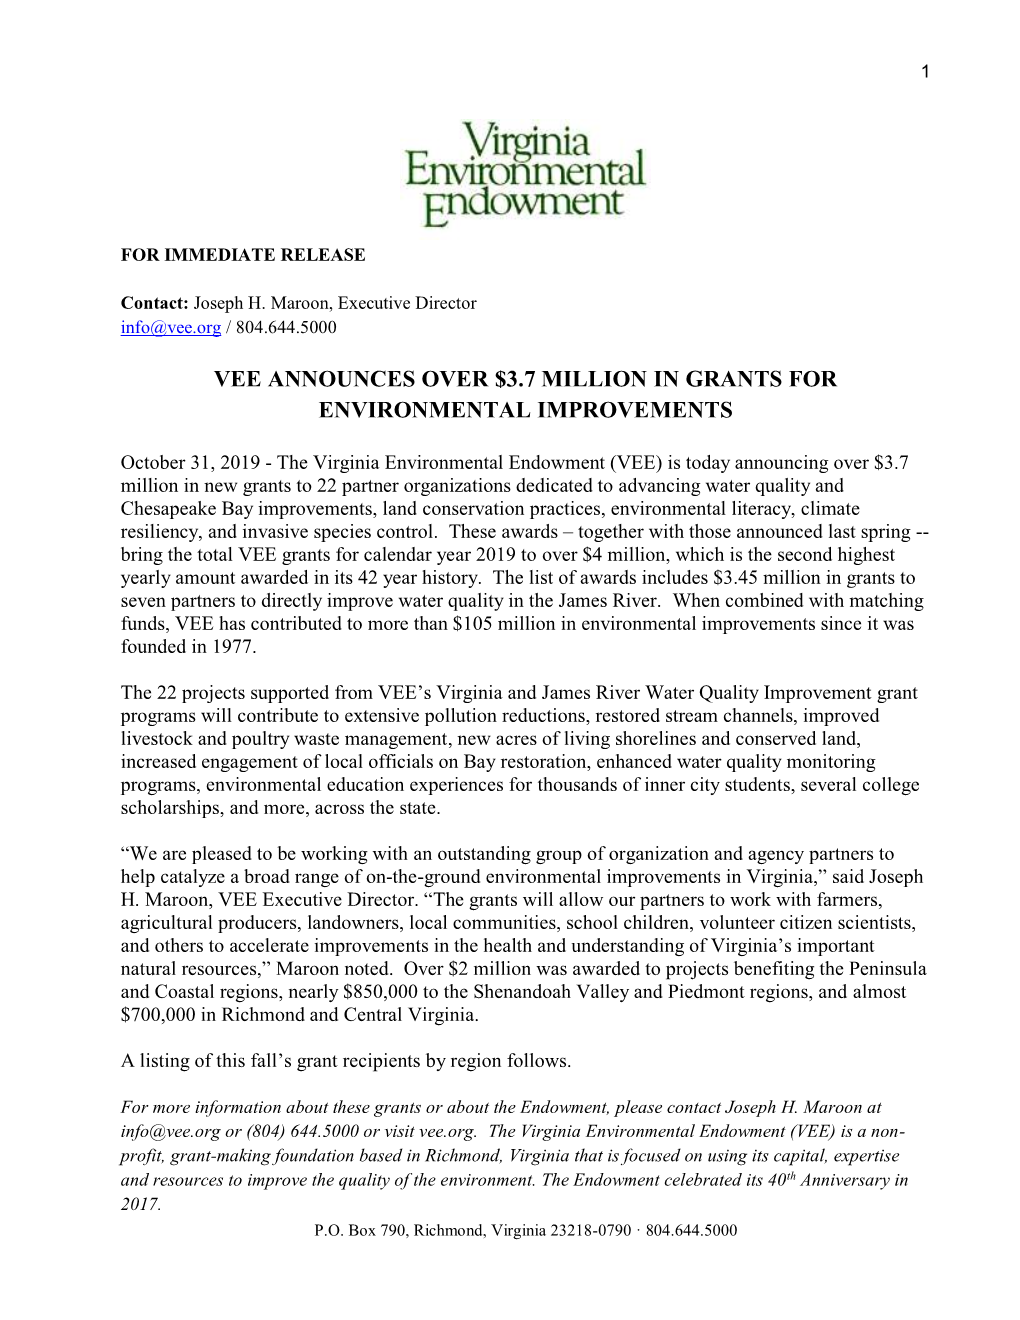 VEE Grantees Press Release May 2014.Docx